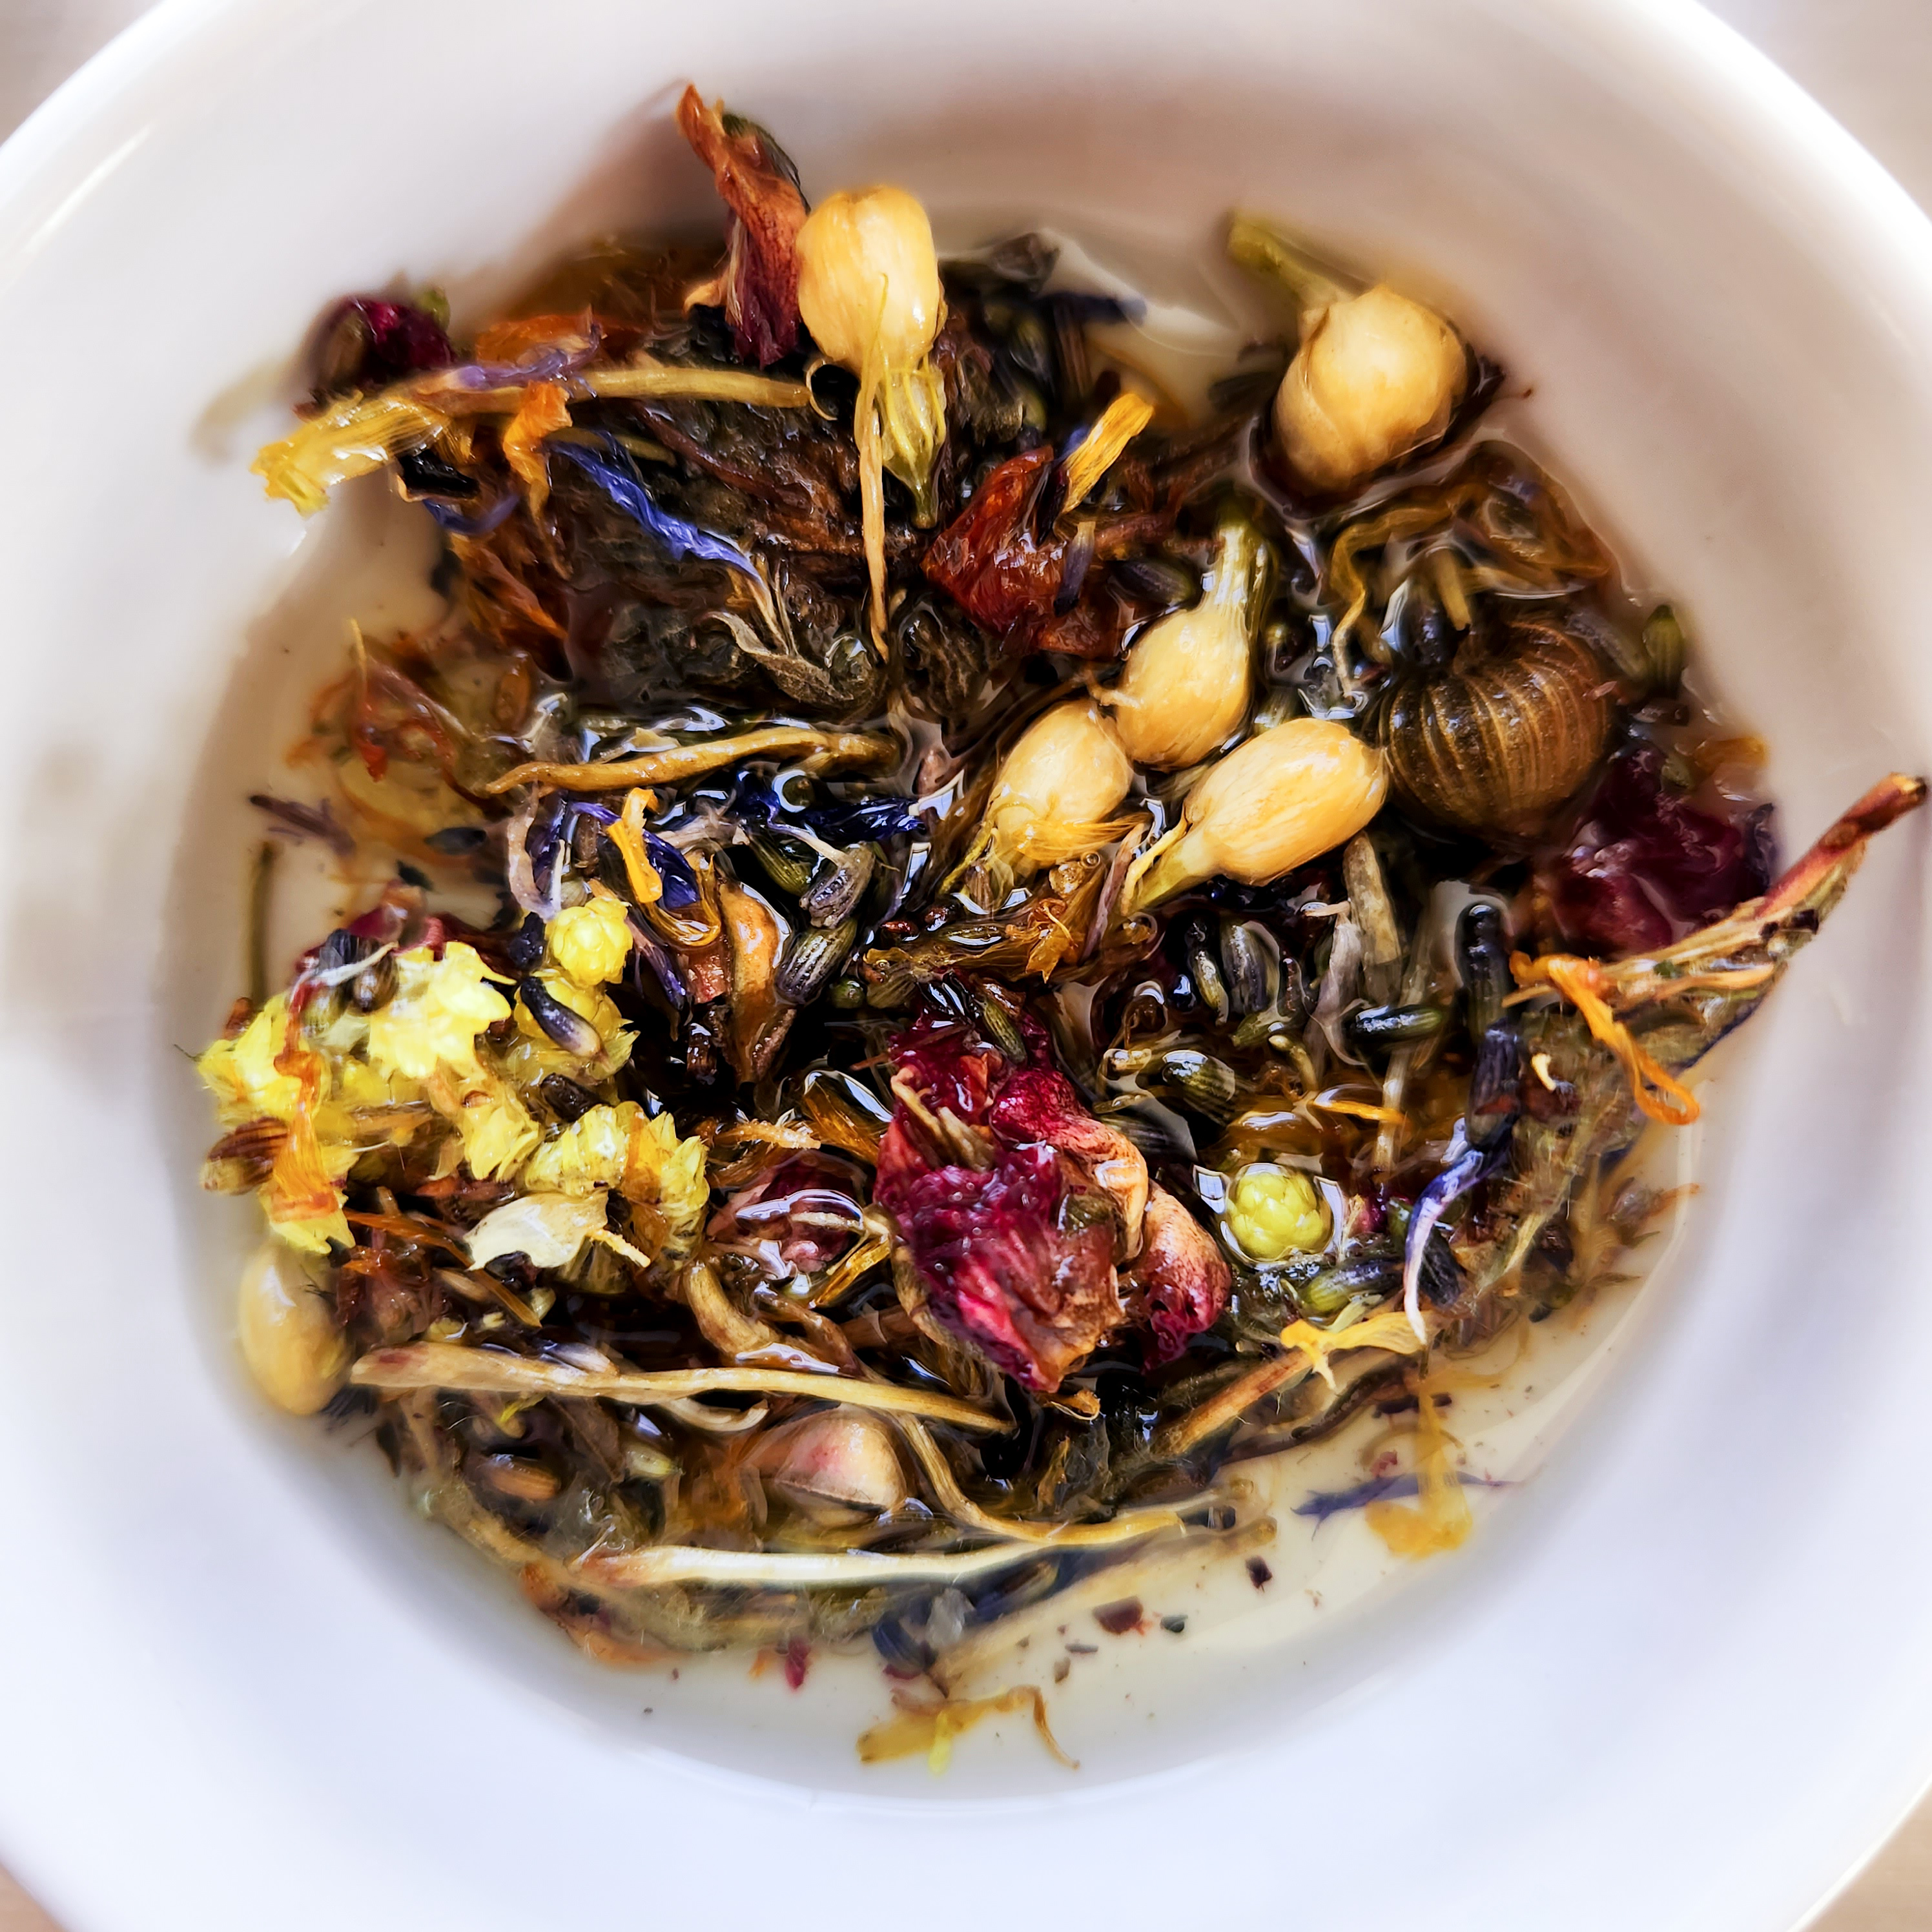 Wilder Botanics | Calm & Support Tea Infusion